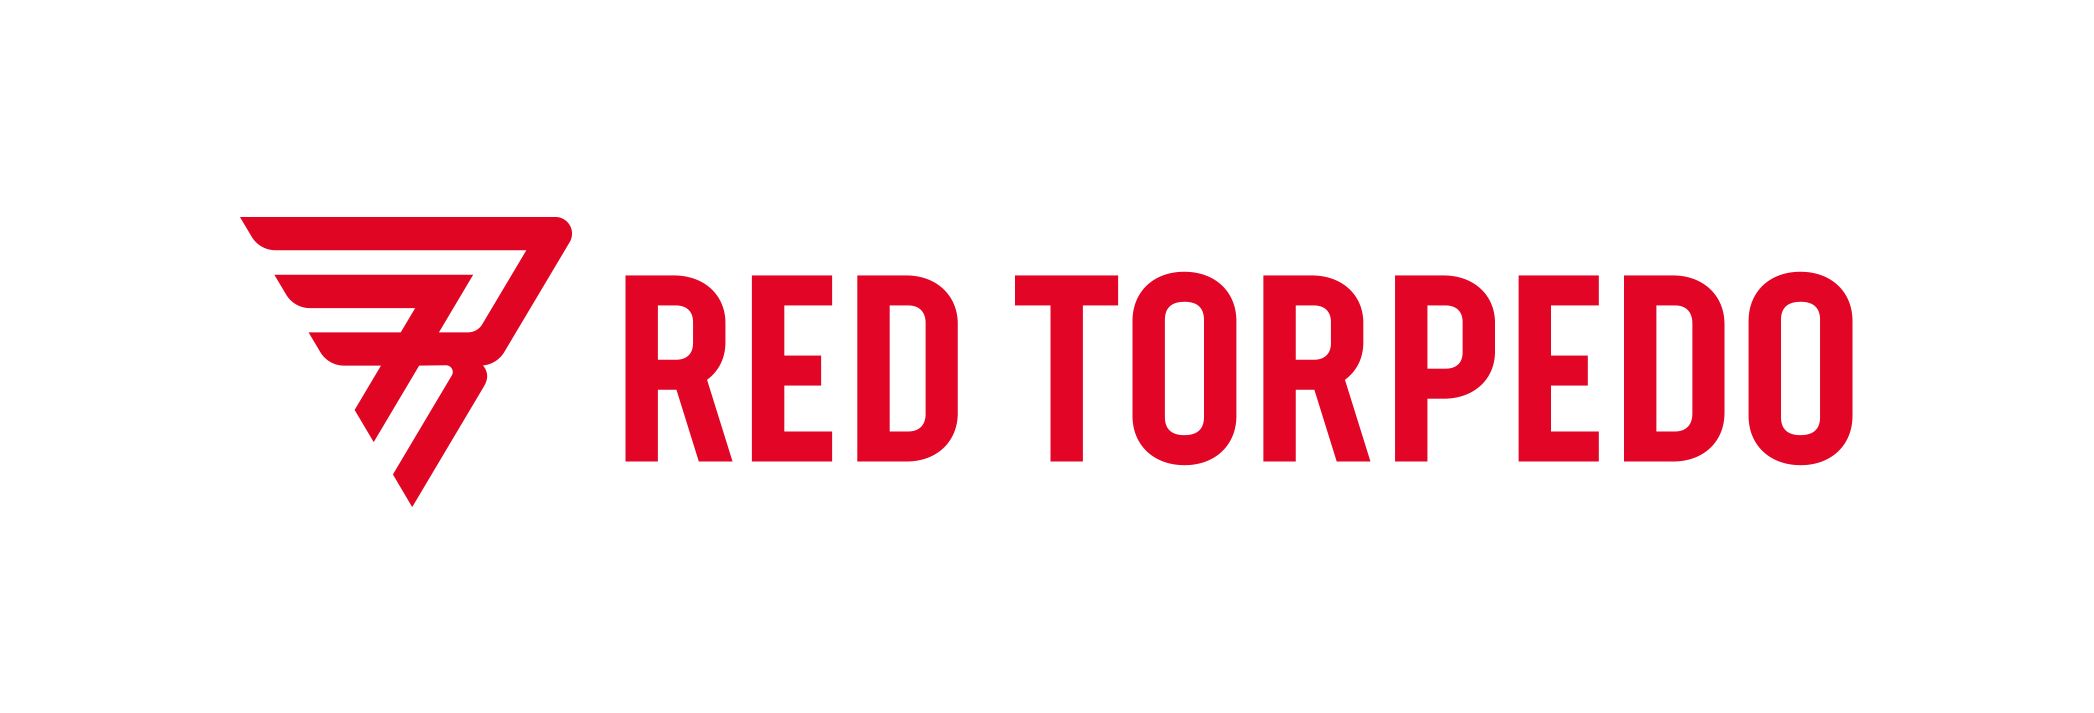 Red Torpedo Clothing